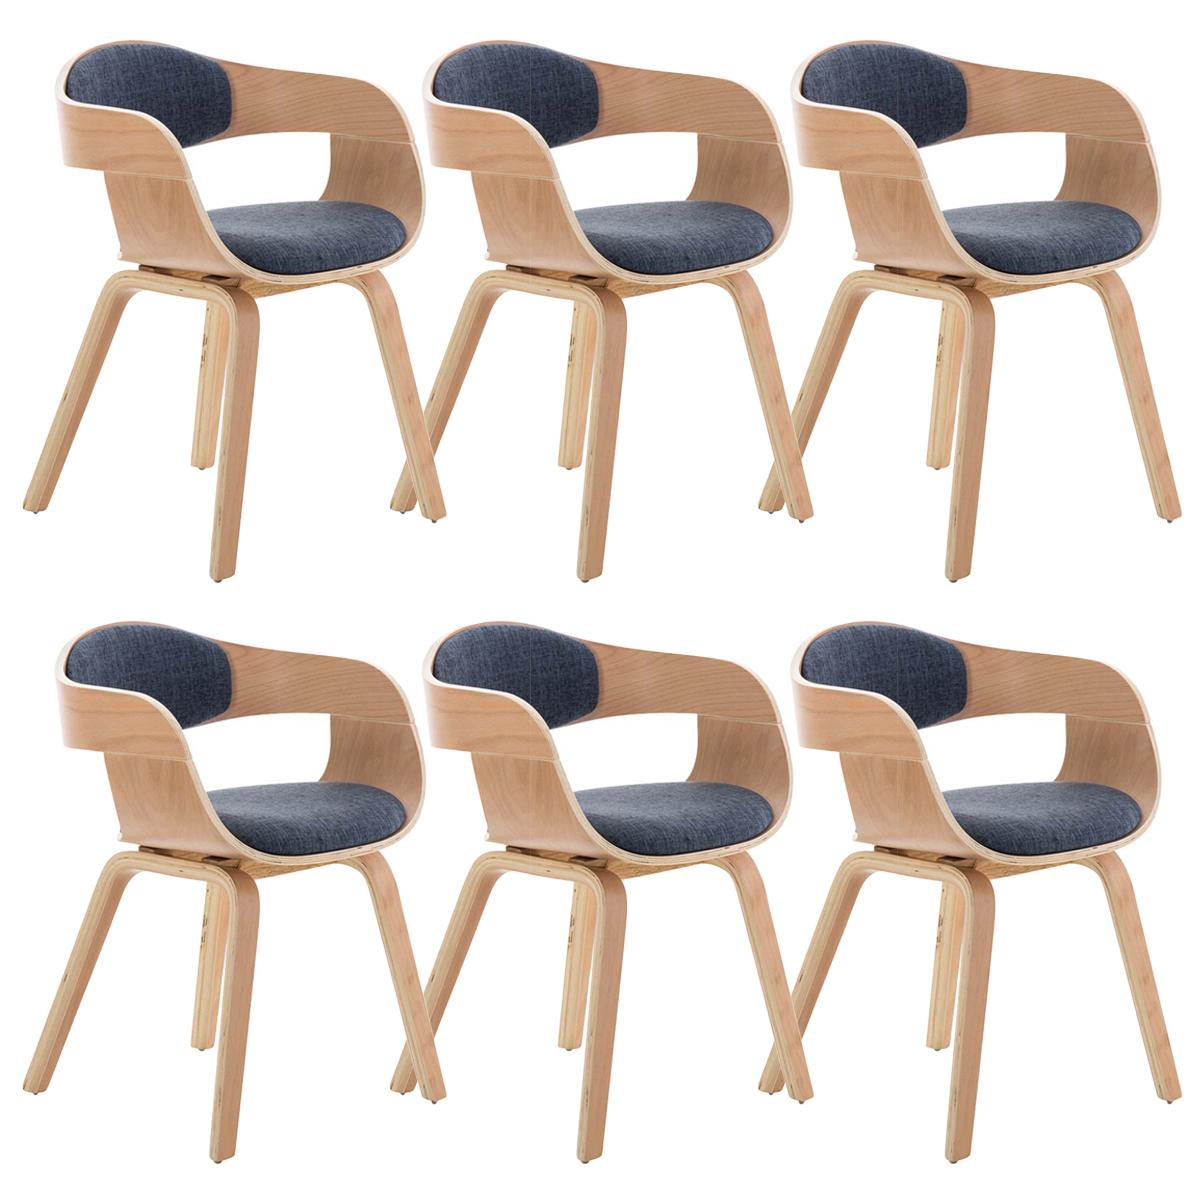 Lote de 6 sillas de Comedor BOLONIA, en Tela Azul, Estructura de Madera color Natural